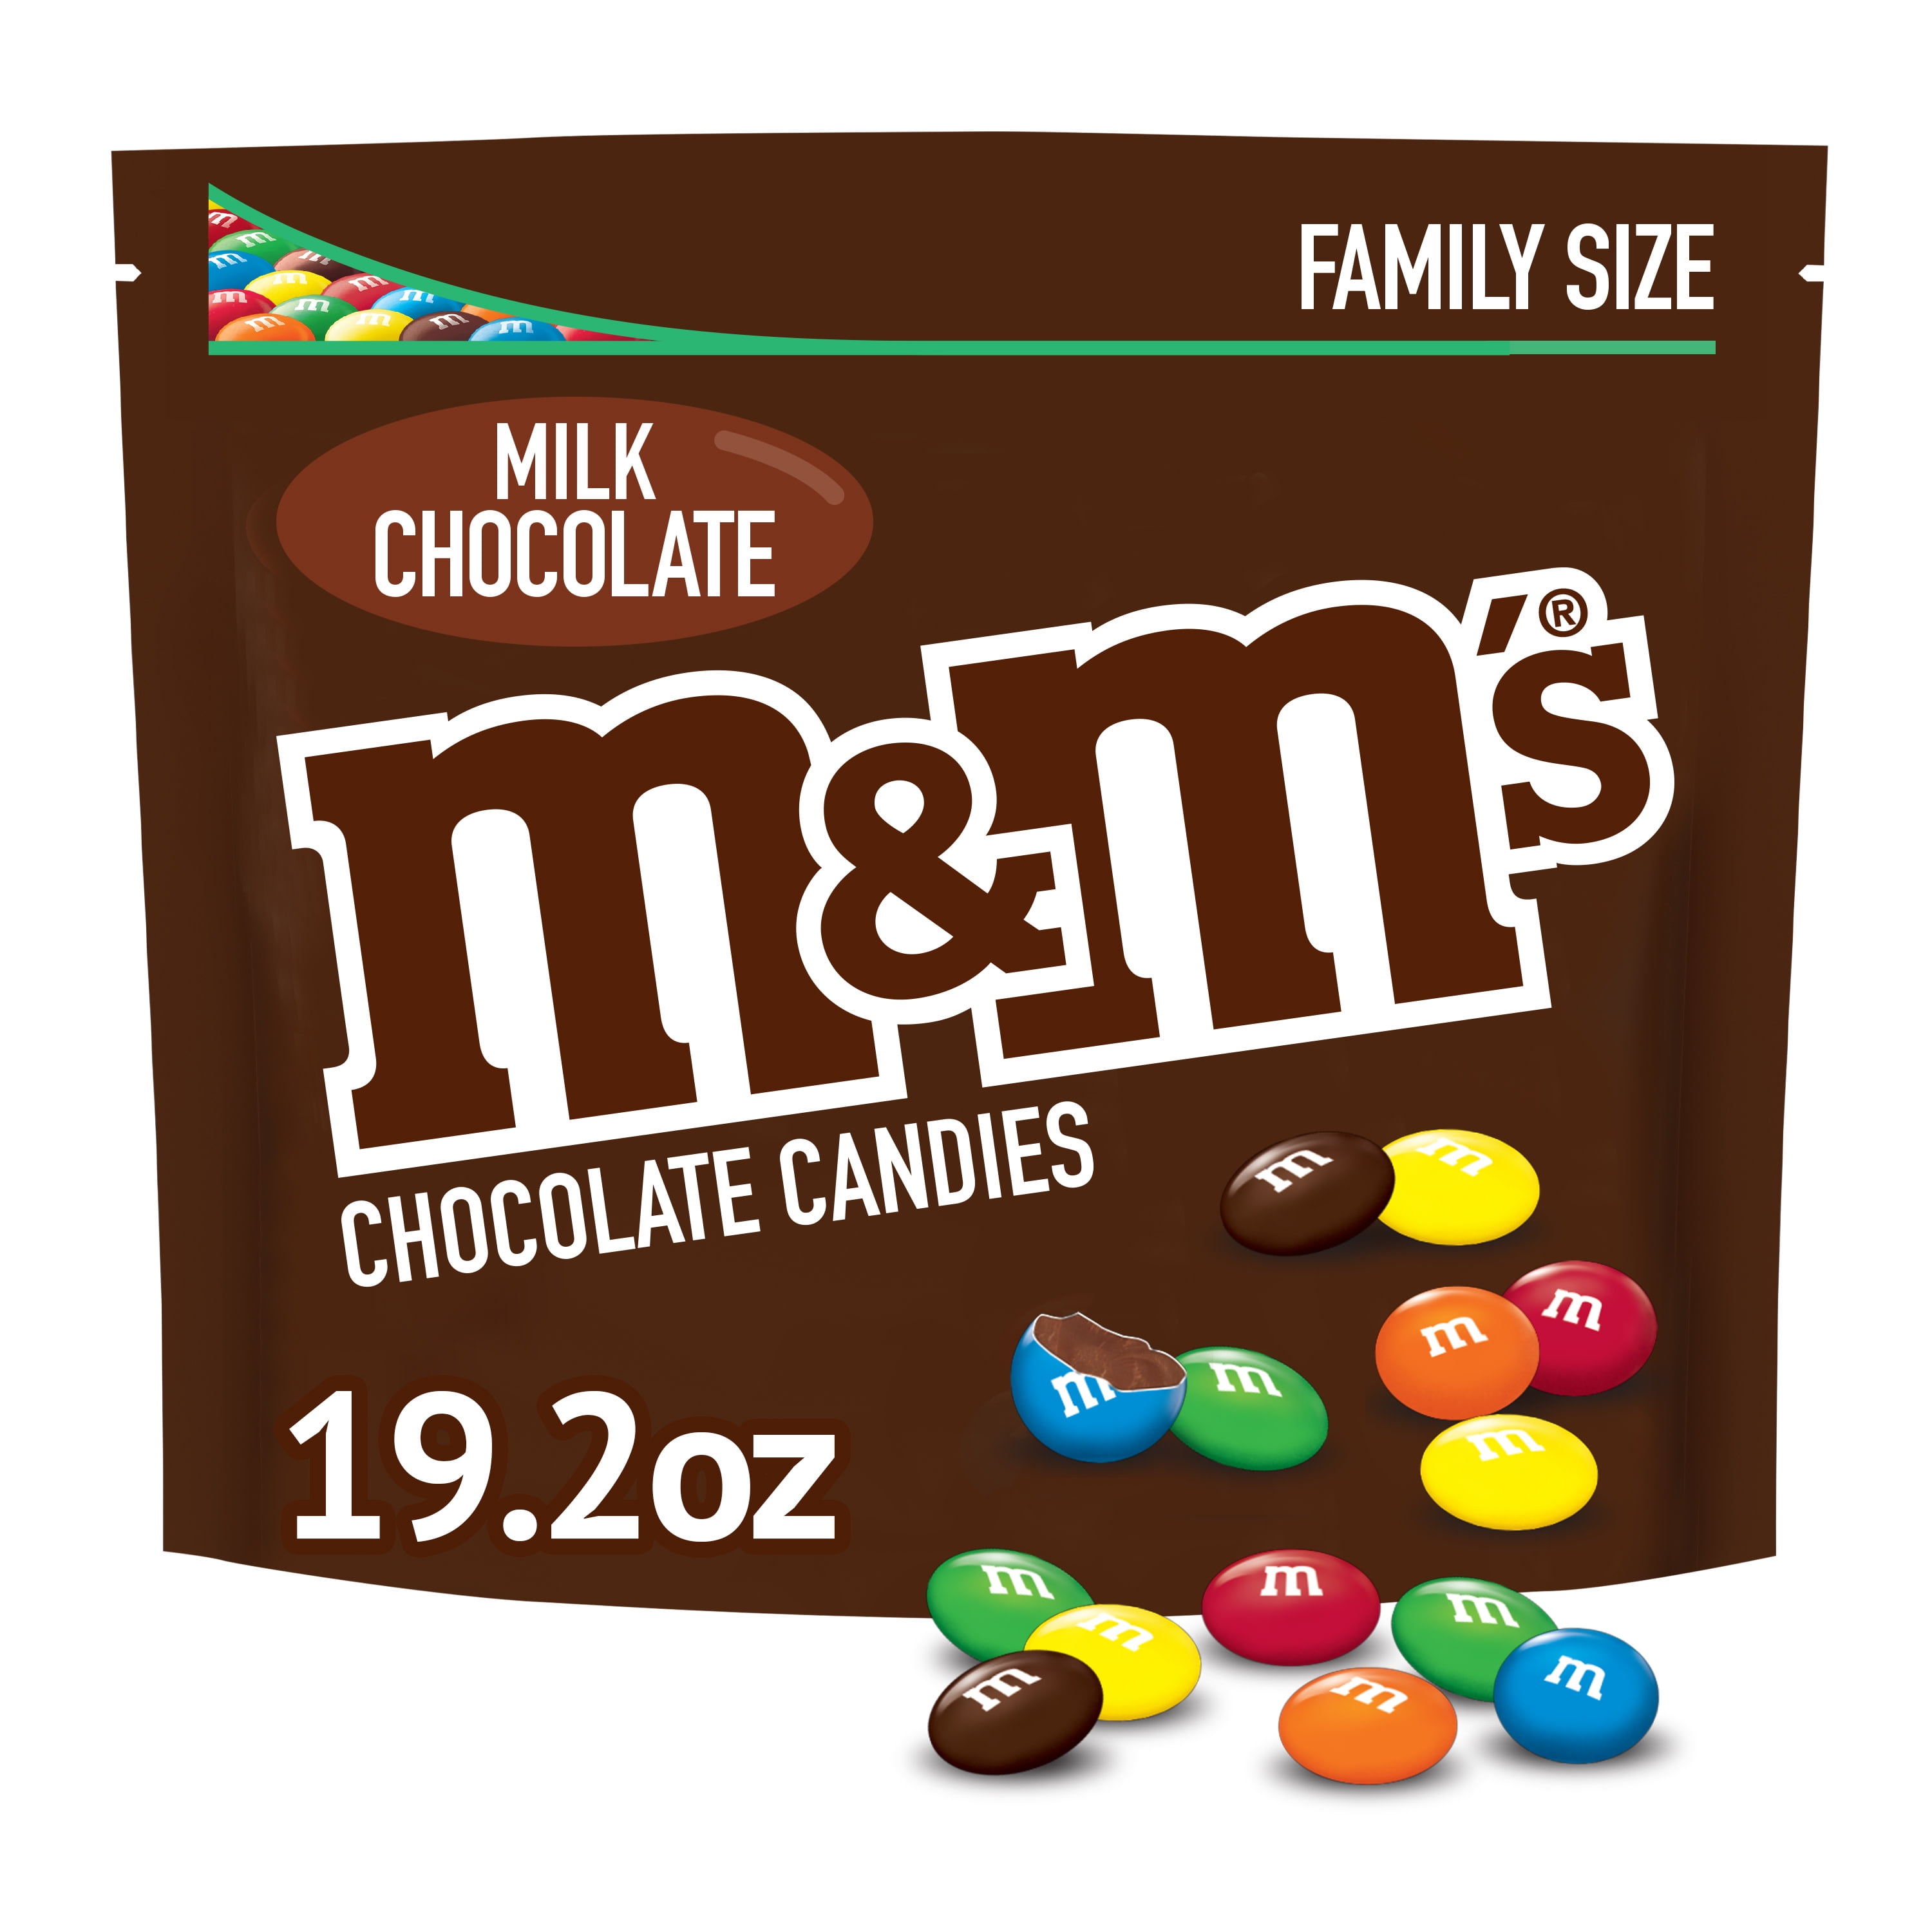 M&M's Milk Chocolate Candy Family Size - 19.2 oz Bag